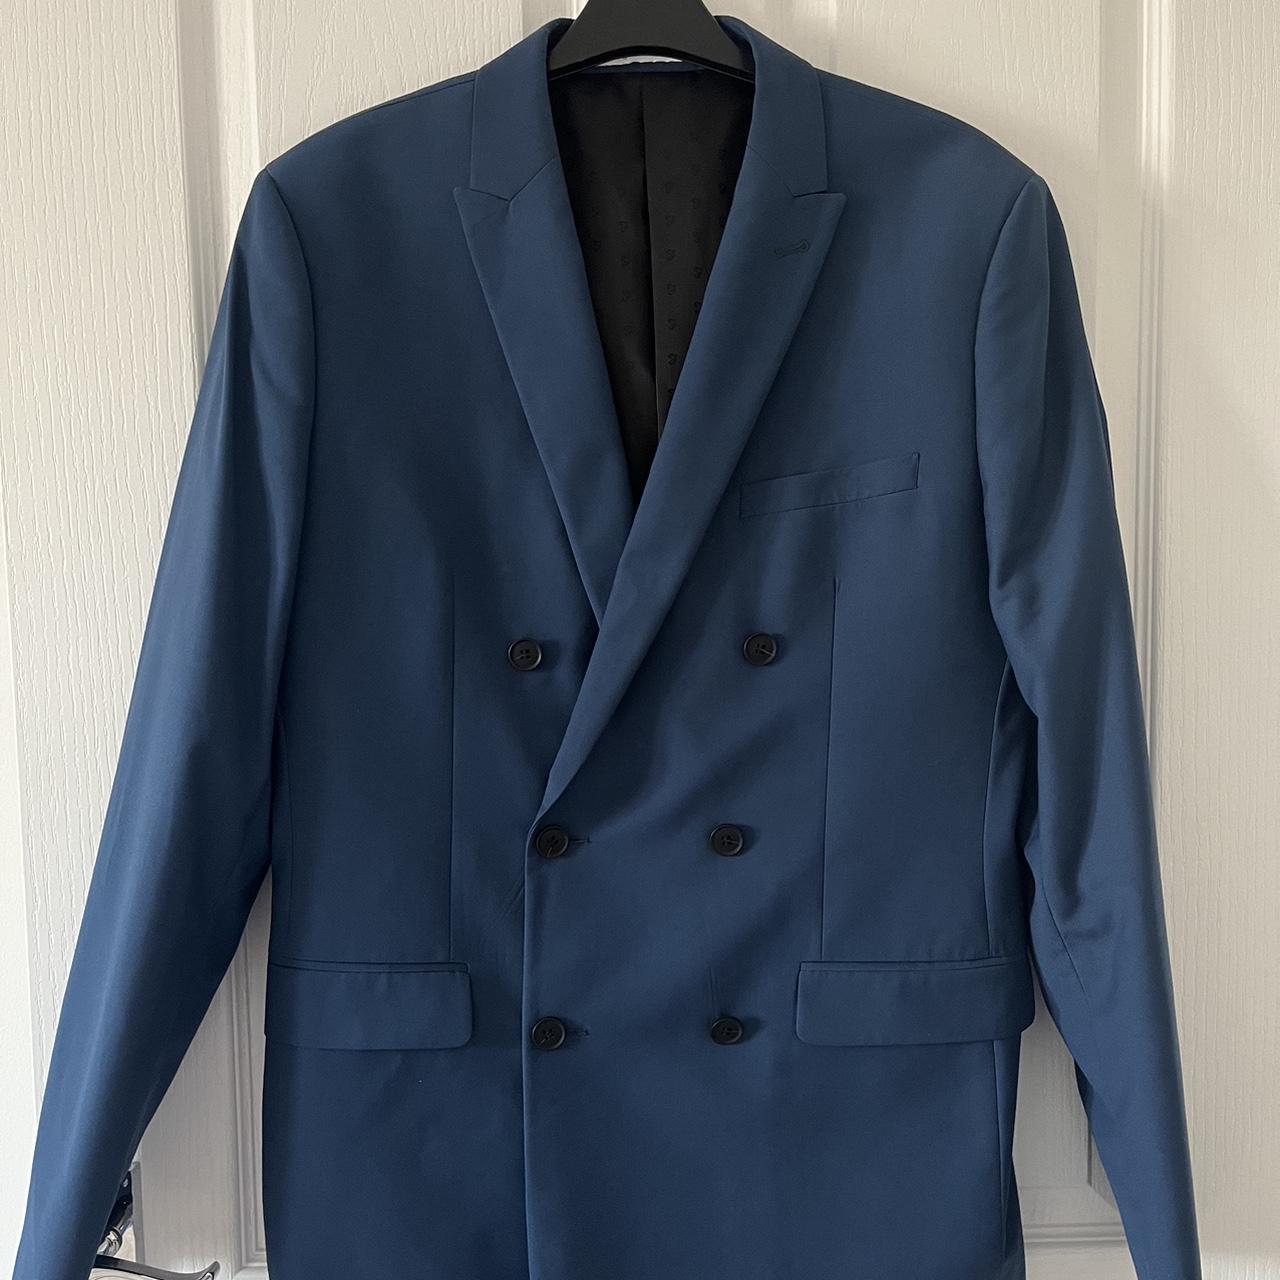 Farah double breasted blazer / suit jacket. Blue...